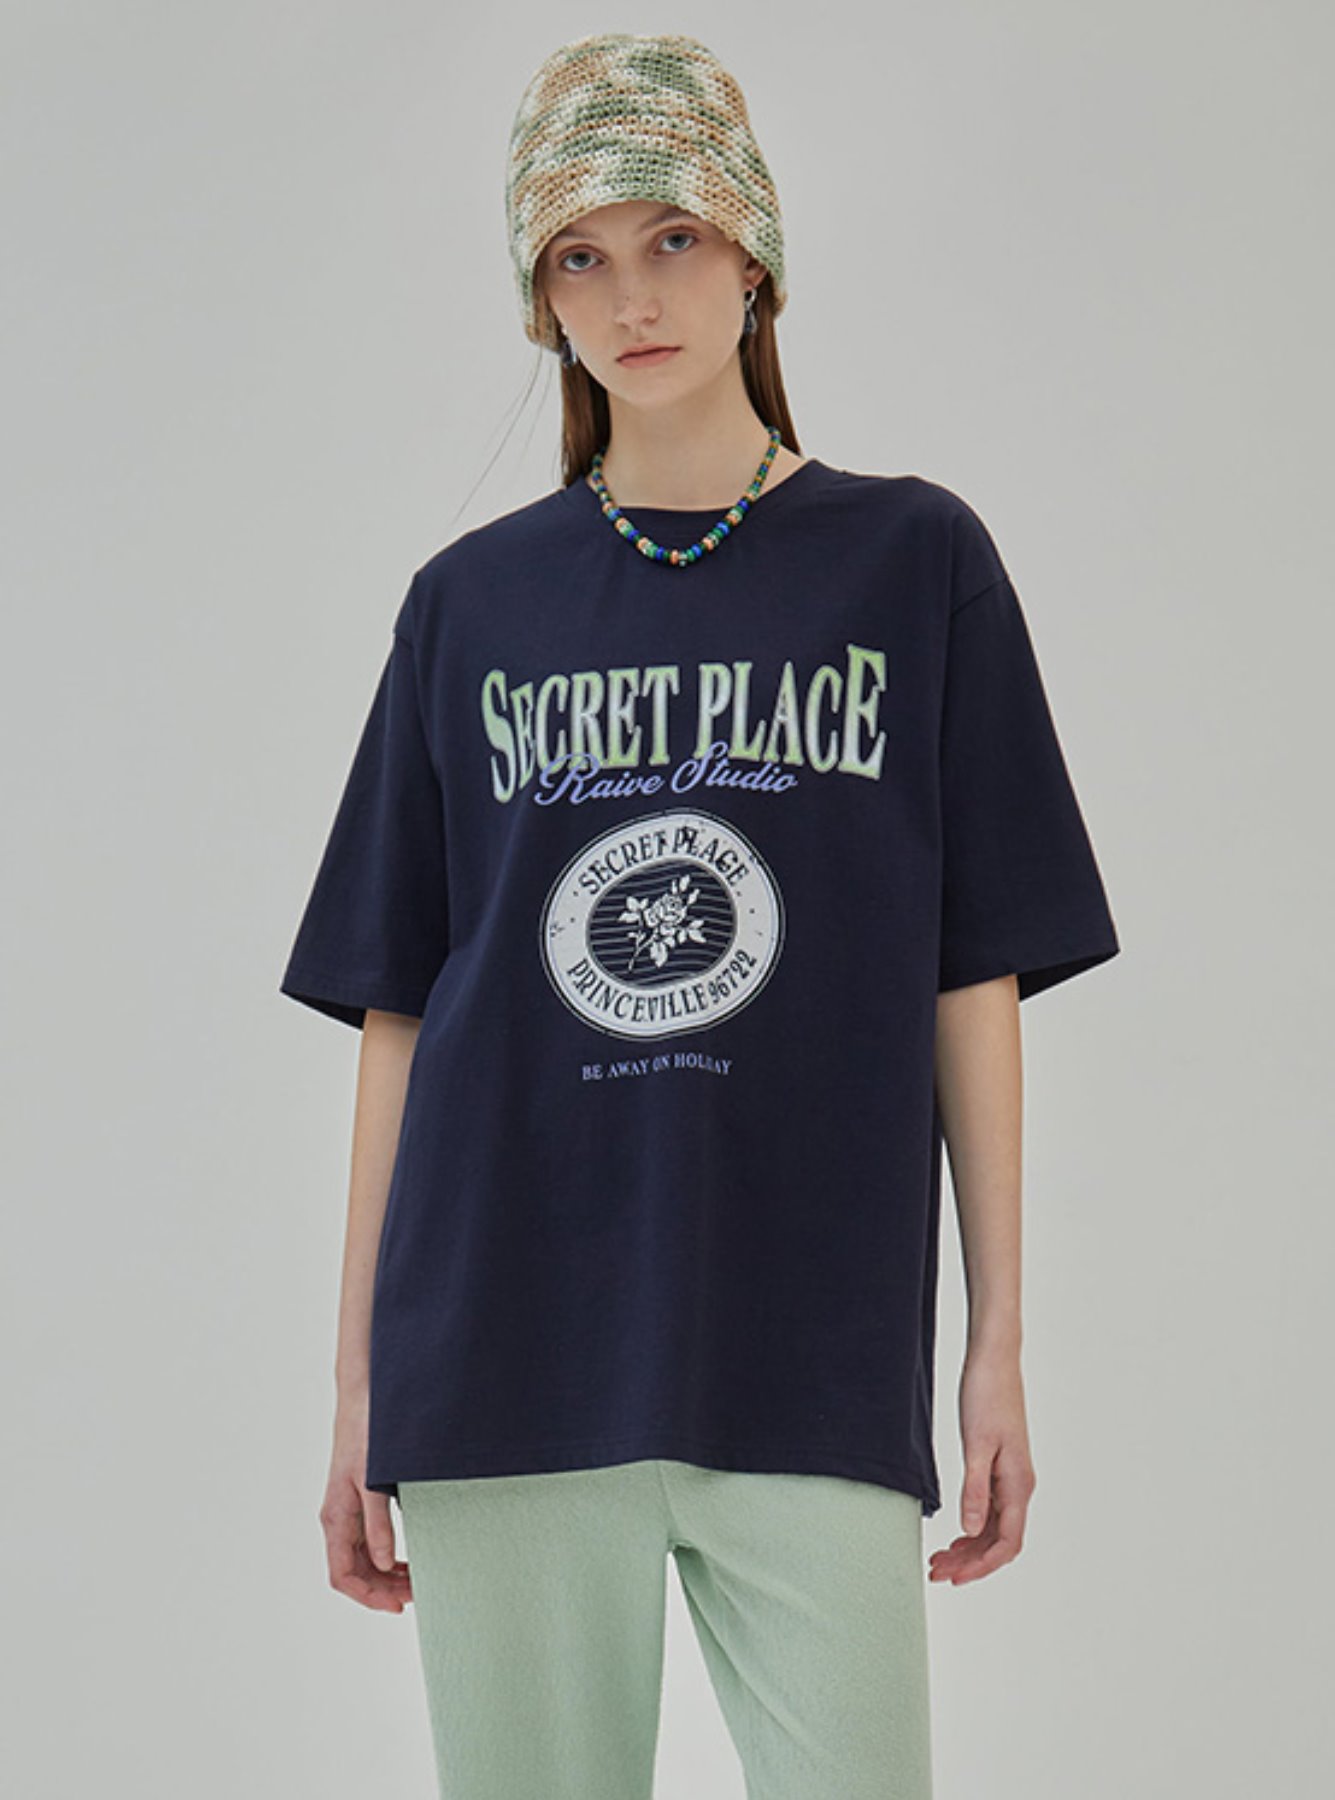 SECRET PLACE Print T-Shirt in Navy VW2SE117-23